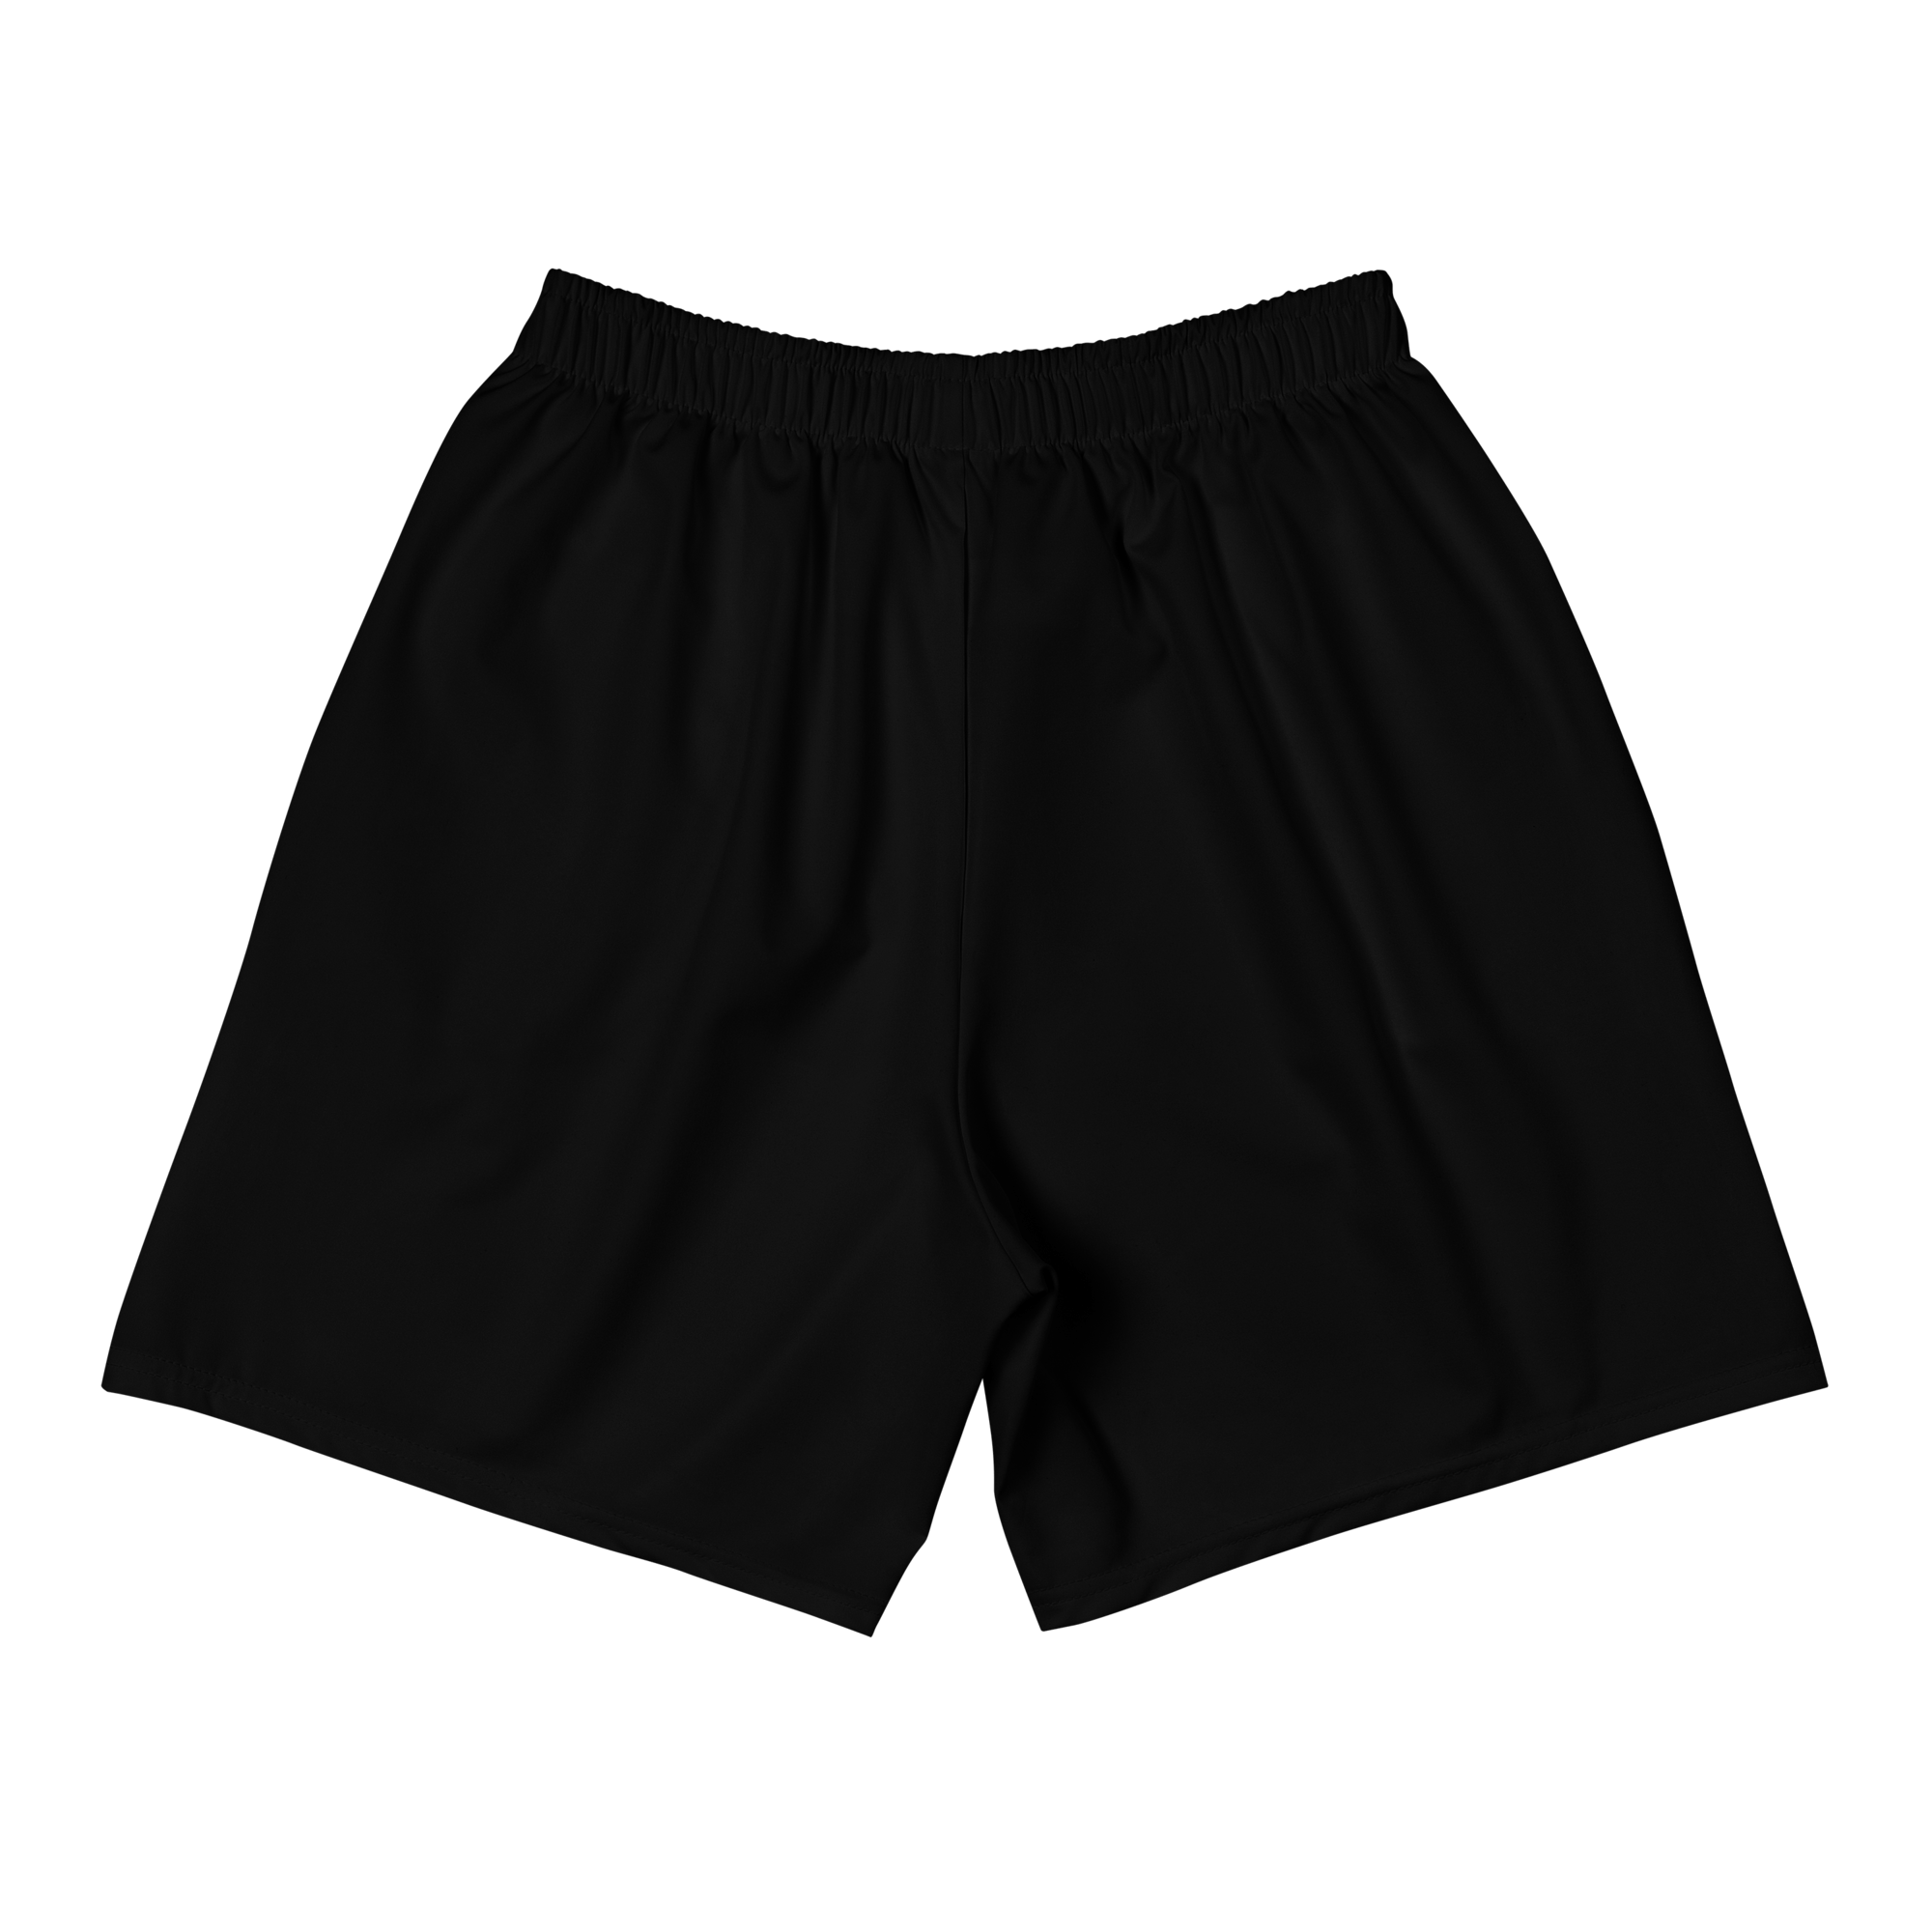 Recycled Athletic Shorts - Black - FormTheory Athletics